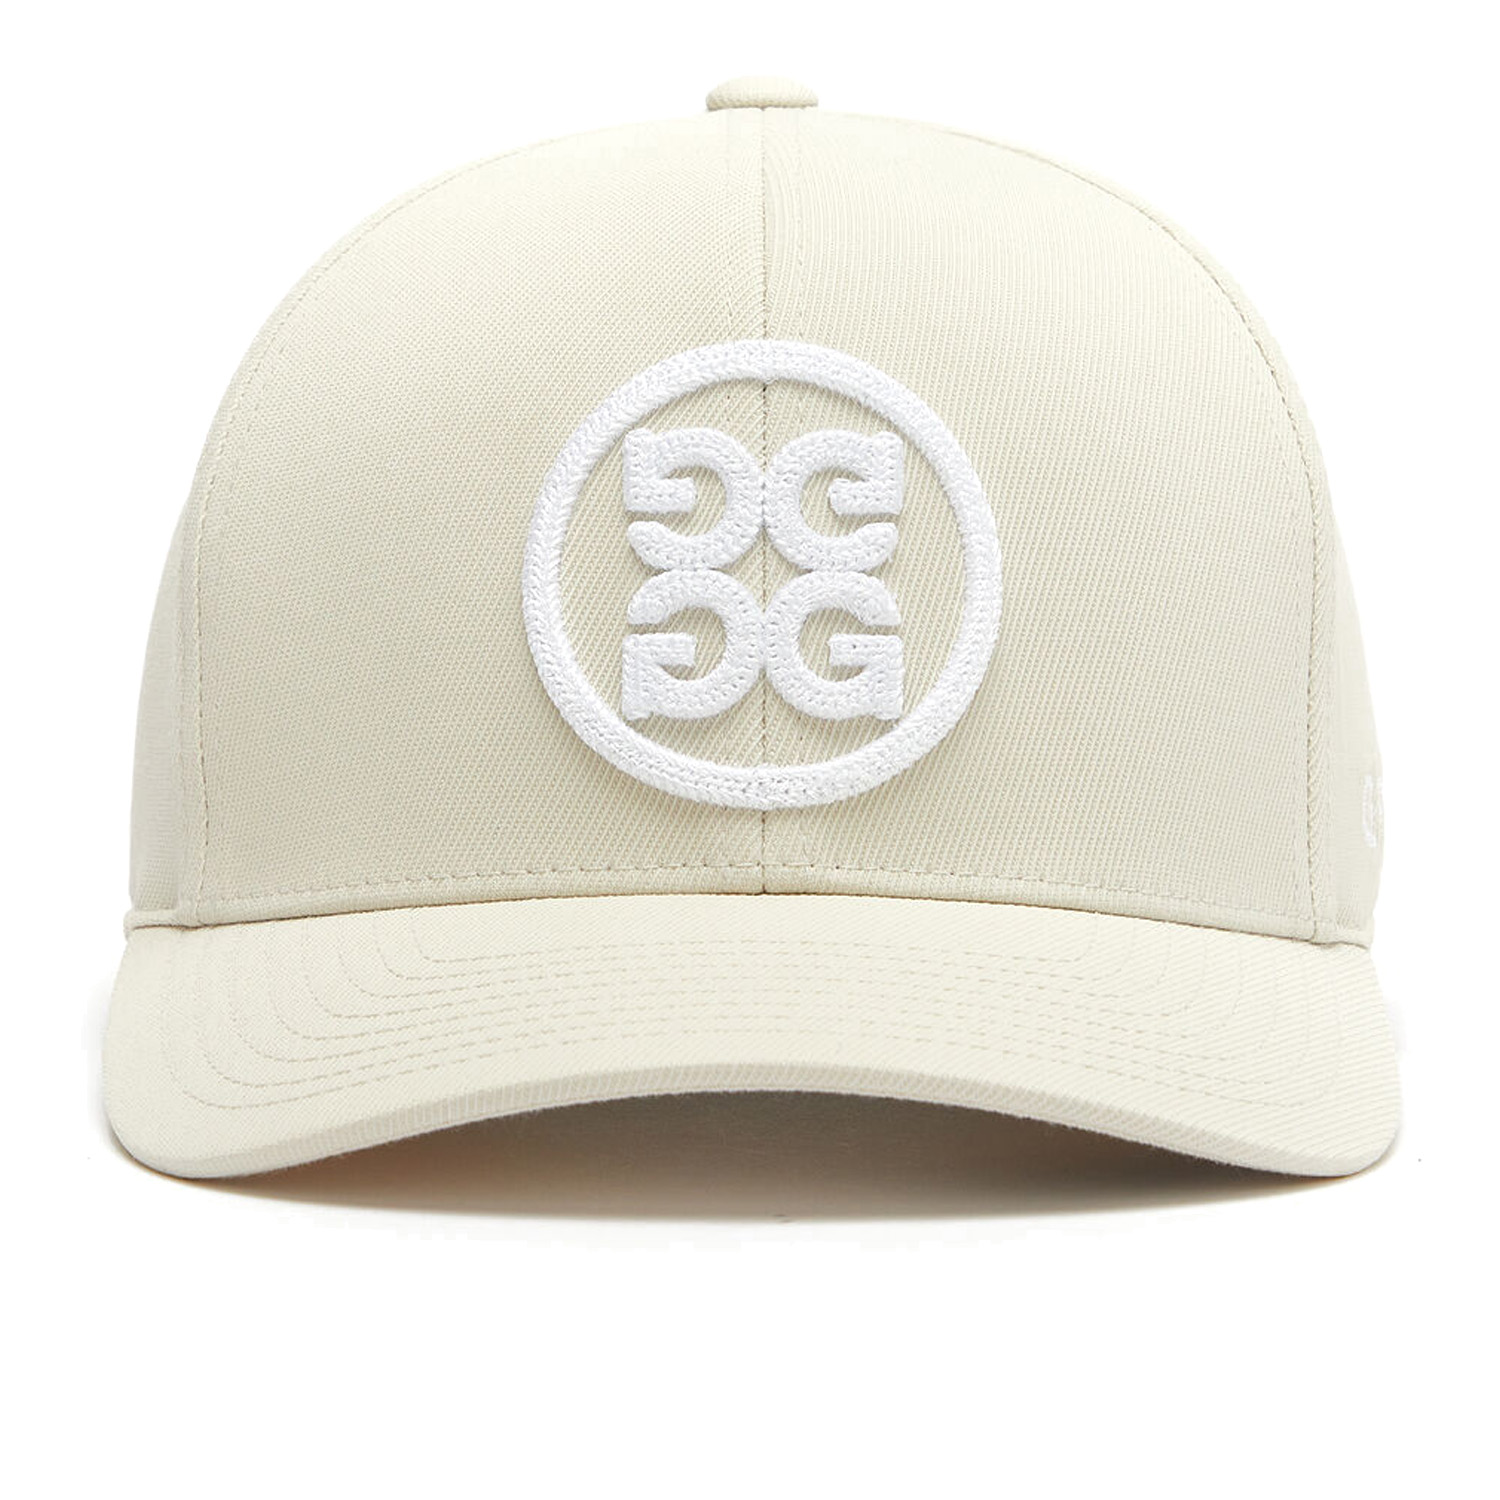 G/FORE Circle G’S Snapback Hat